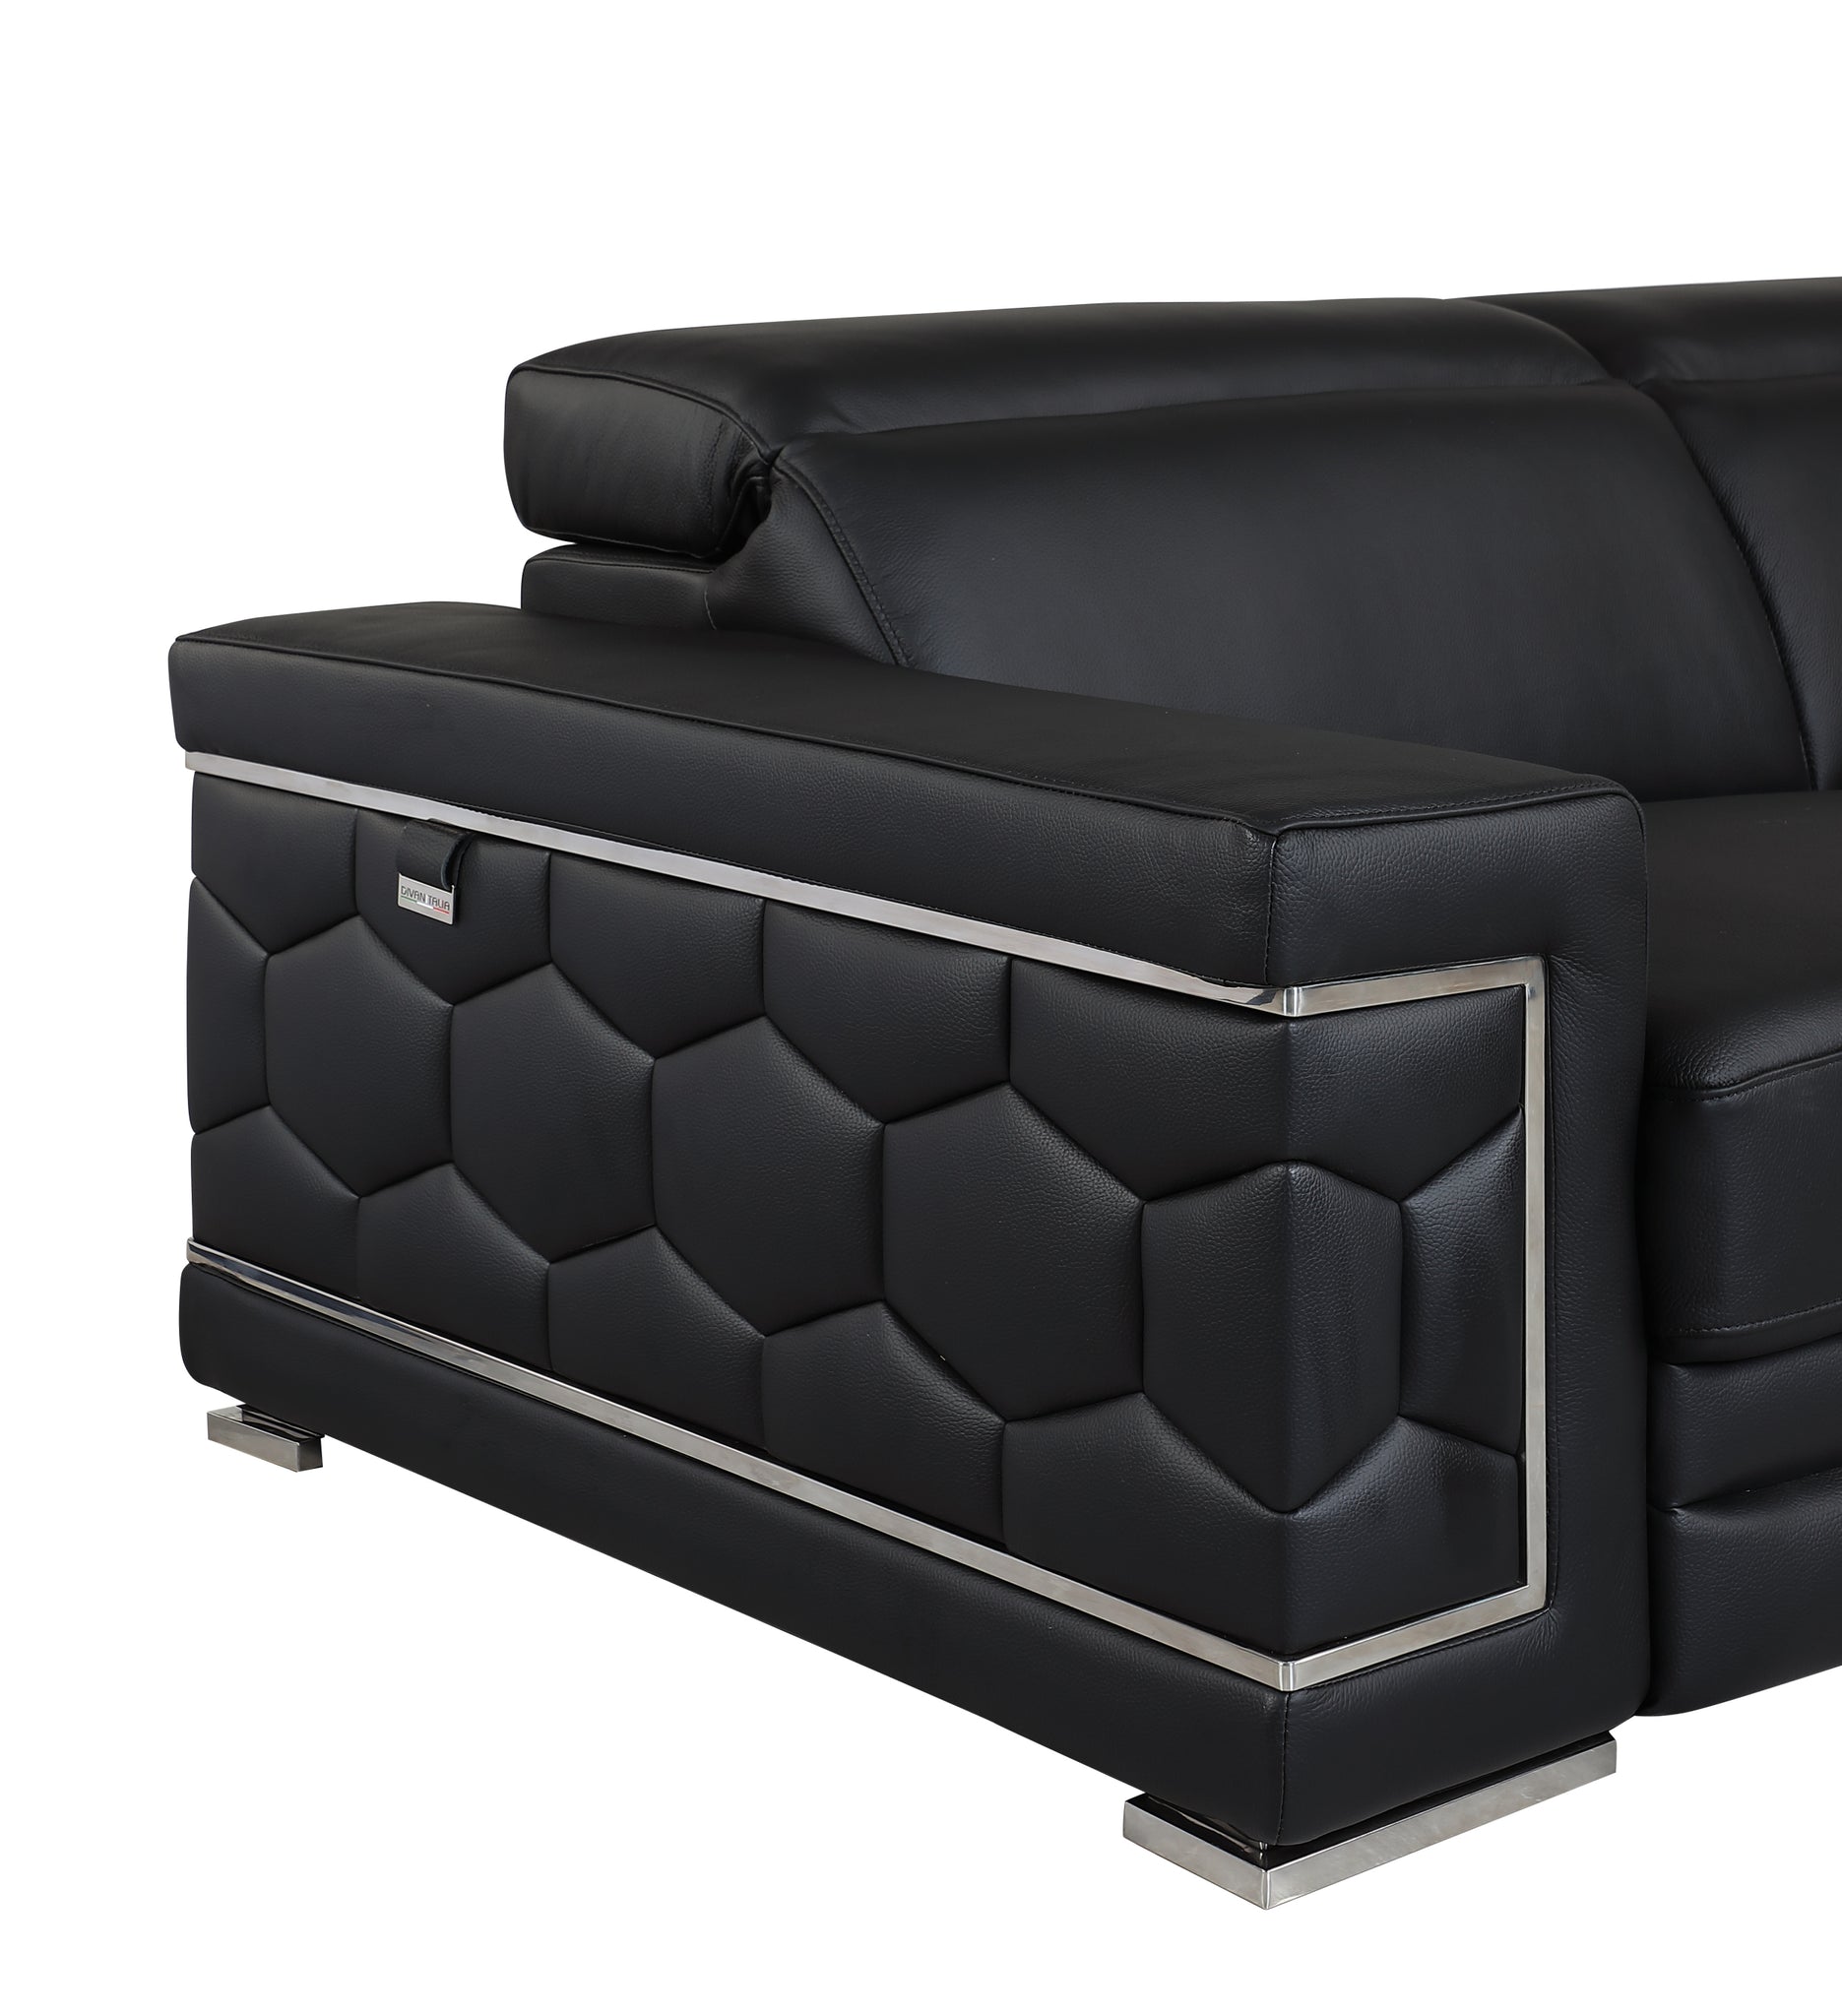 Top Grain Italian Leather Sofa black-foam-leather